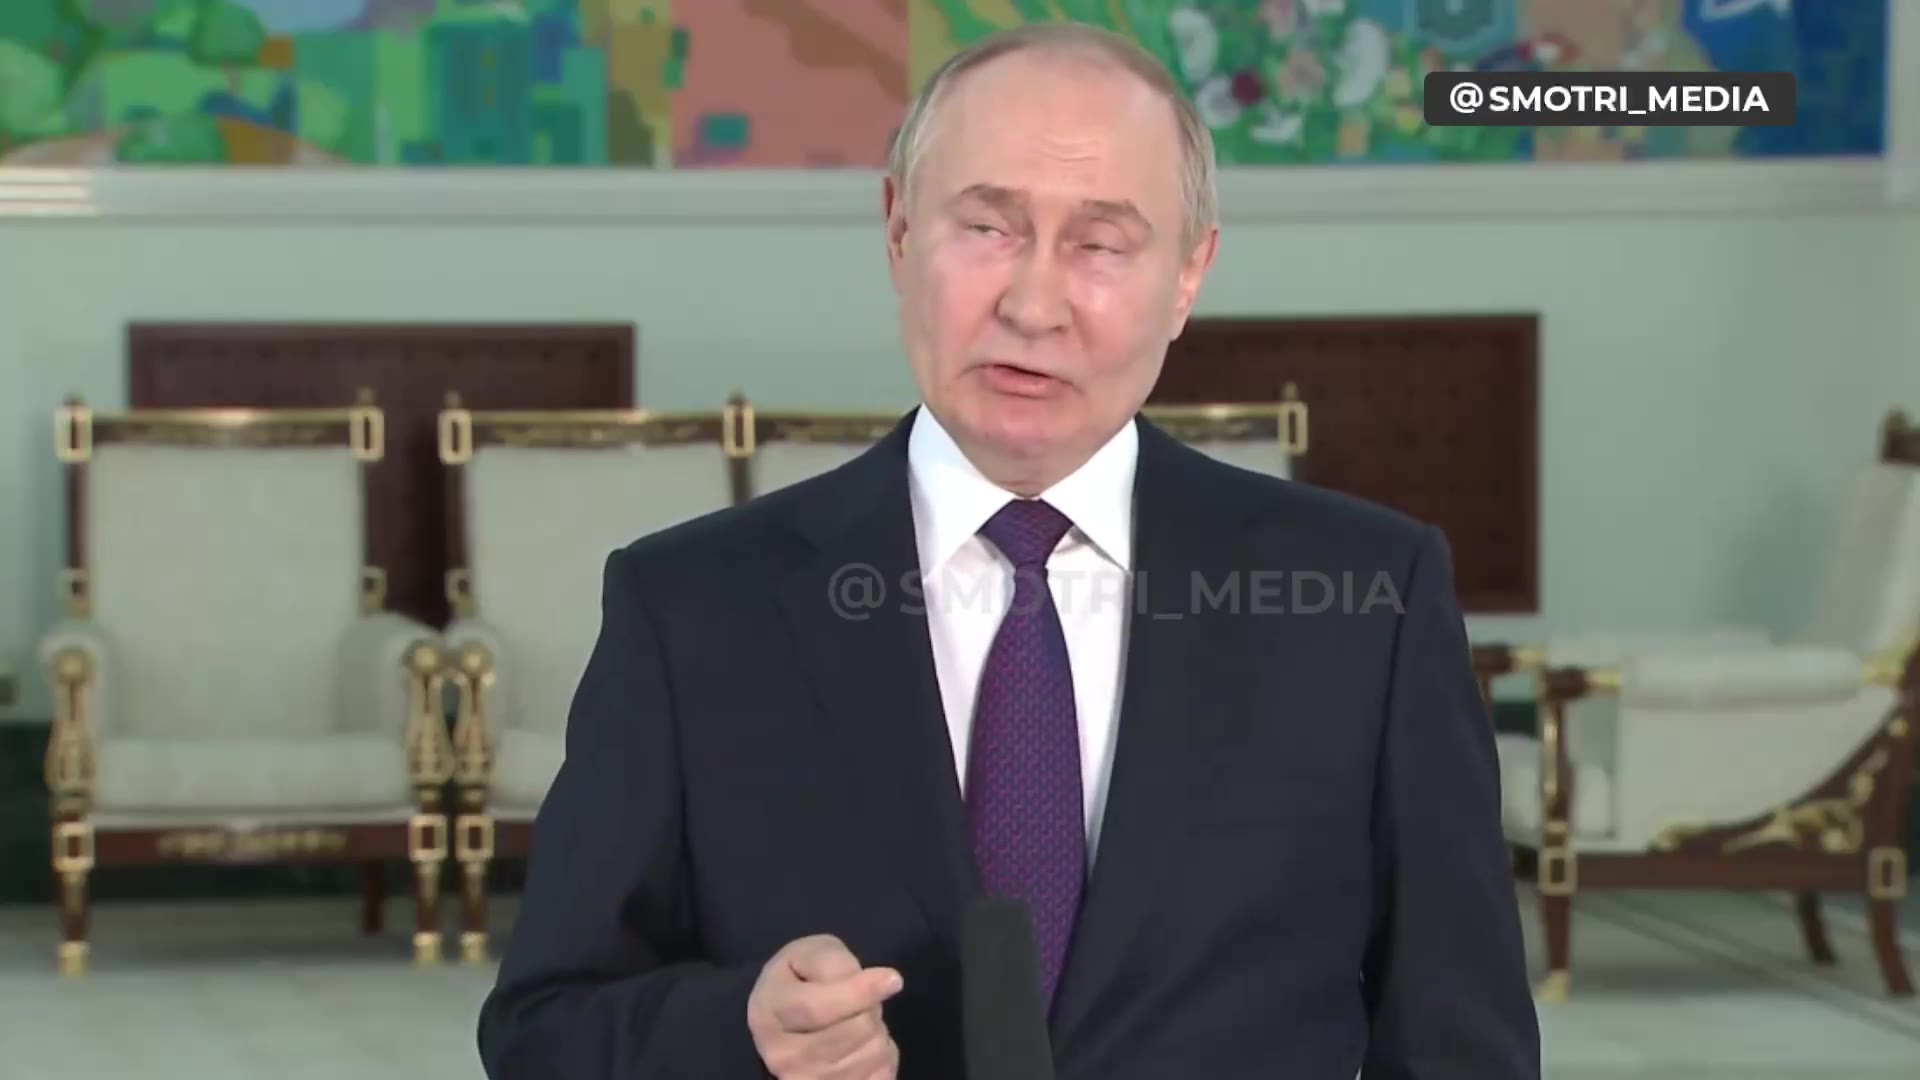 Putin says Verkhovna Rada of Ukraine is legitimate and speaker of Verkhovna Rada should be the acting President